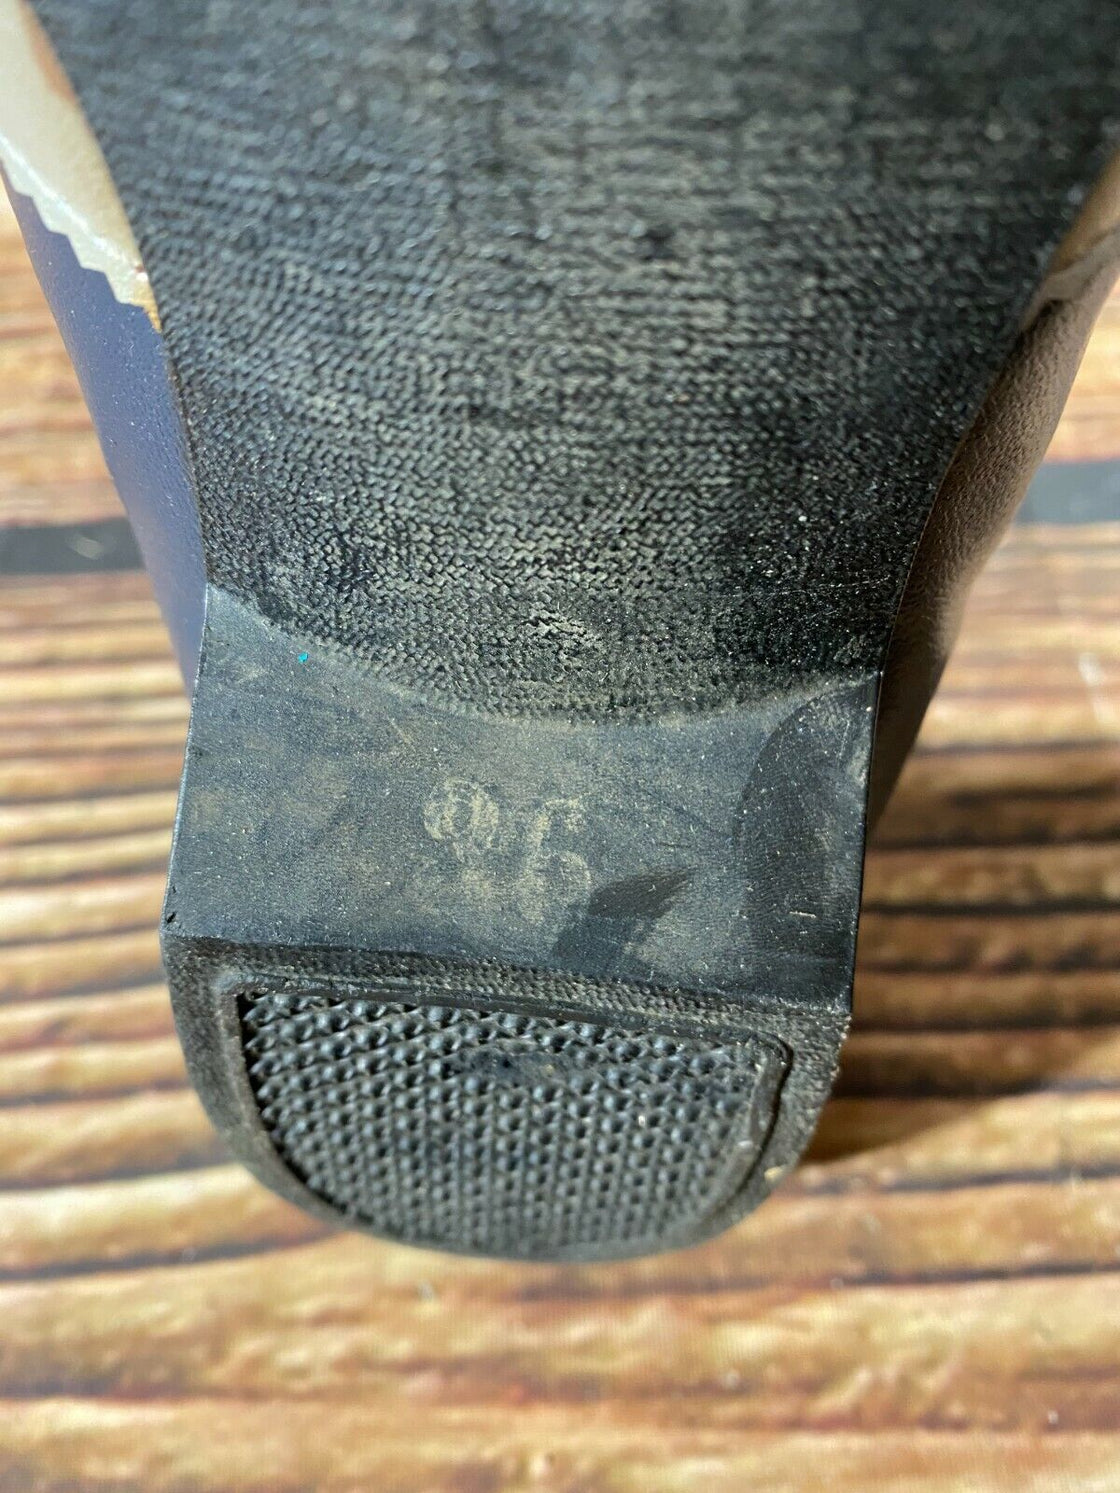 Botas Vintage Cross Country Ski Boots Size EU36 US4.5 Nordic Norm NN 75mm 3pin